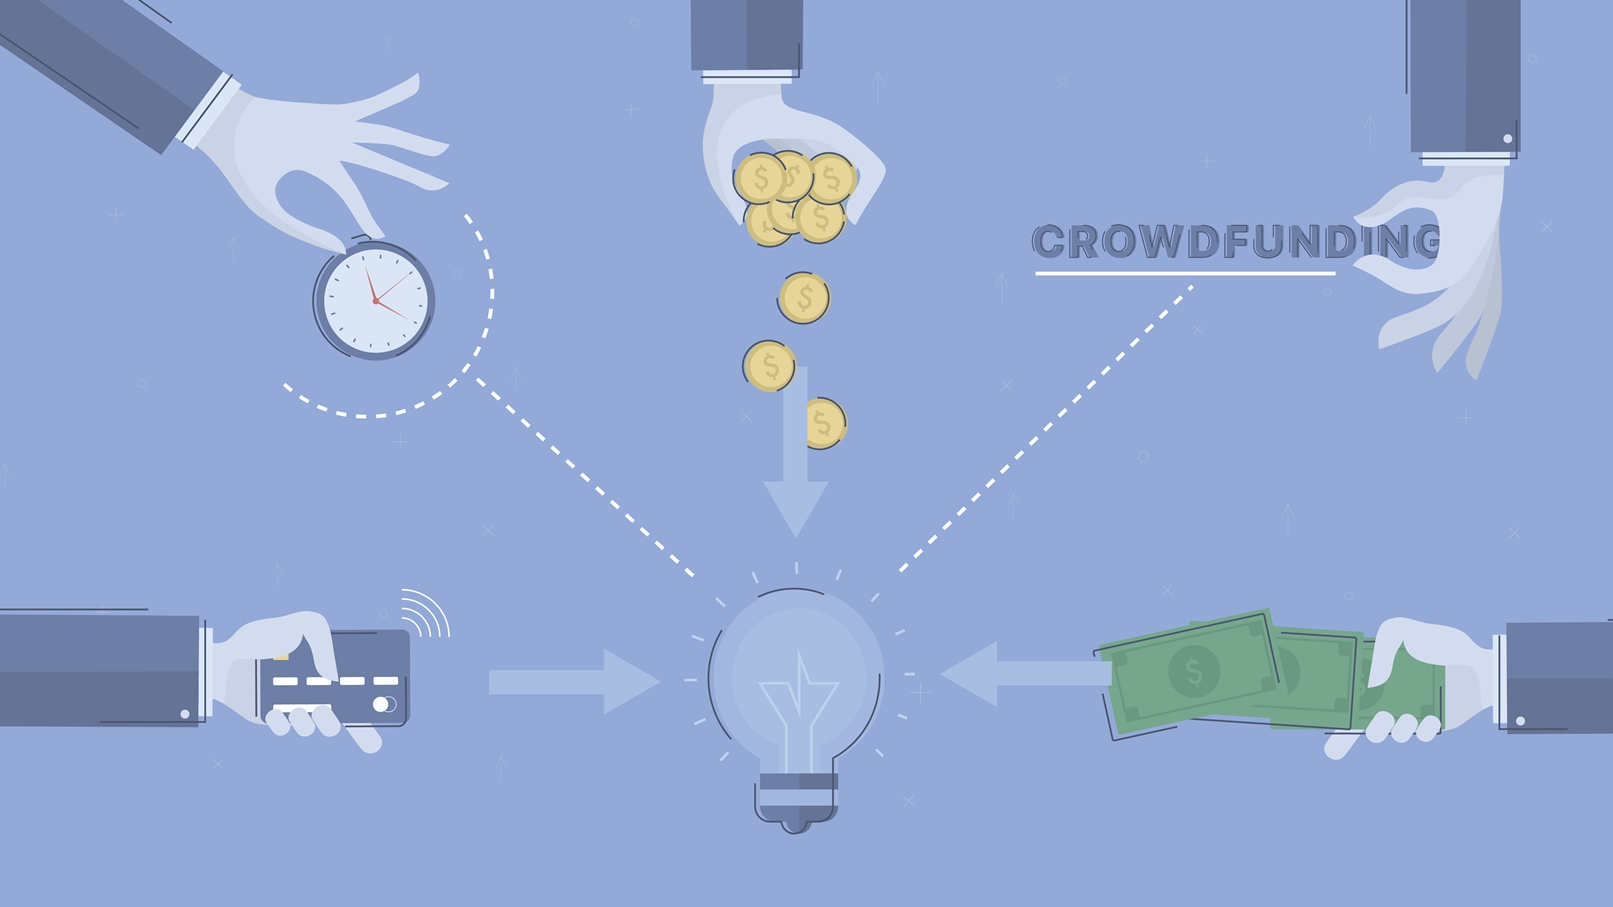 Crowdfunding illustration by Denis Gorelkin/Shutterstock.com